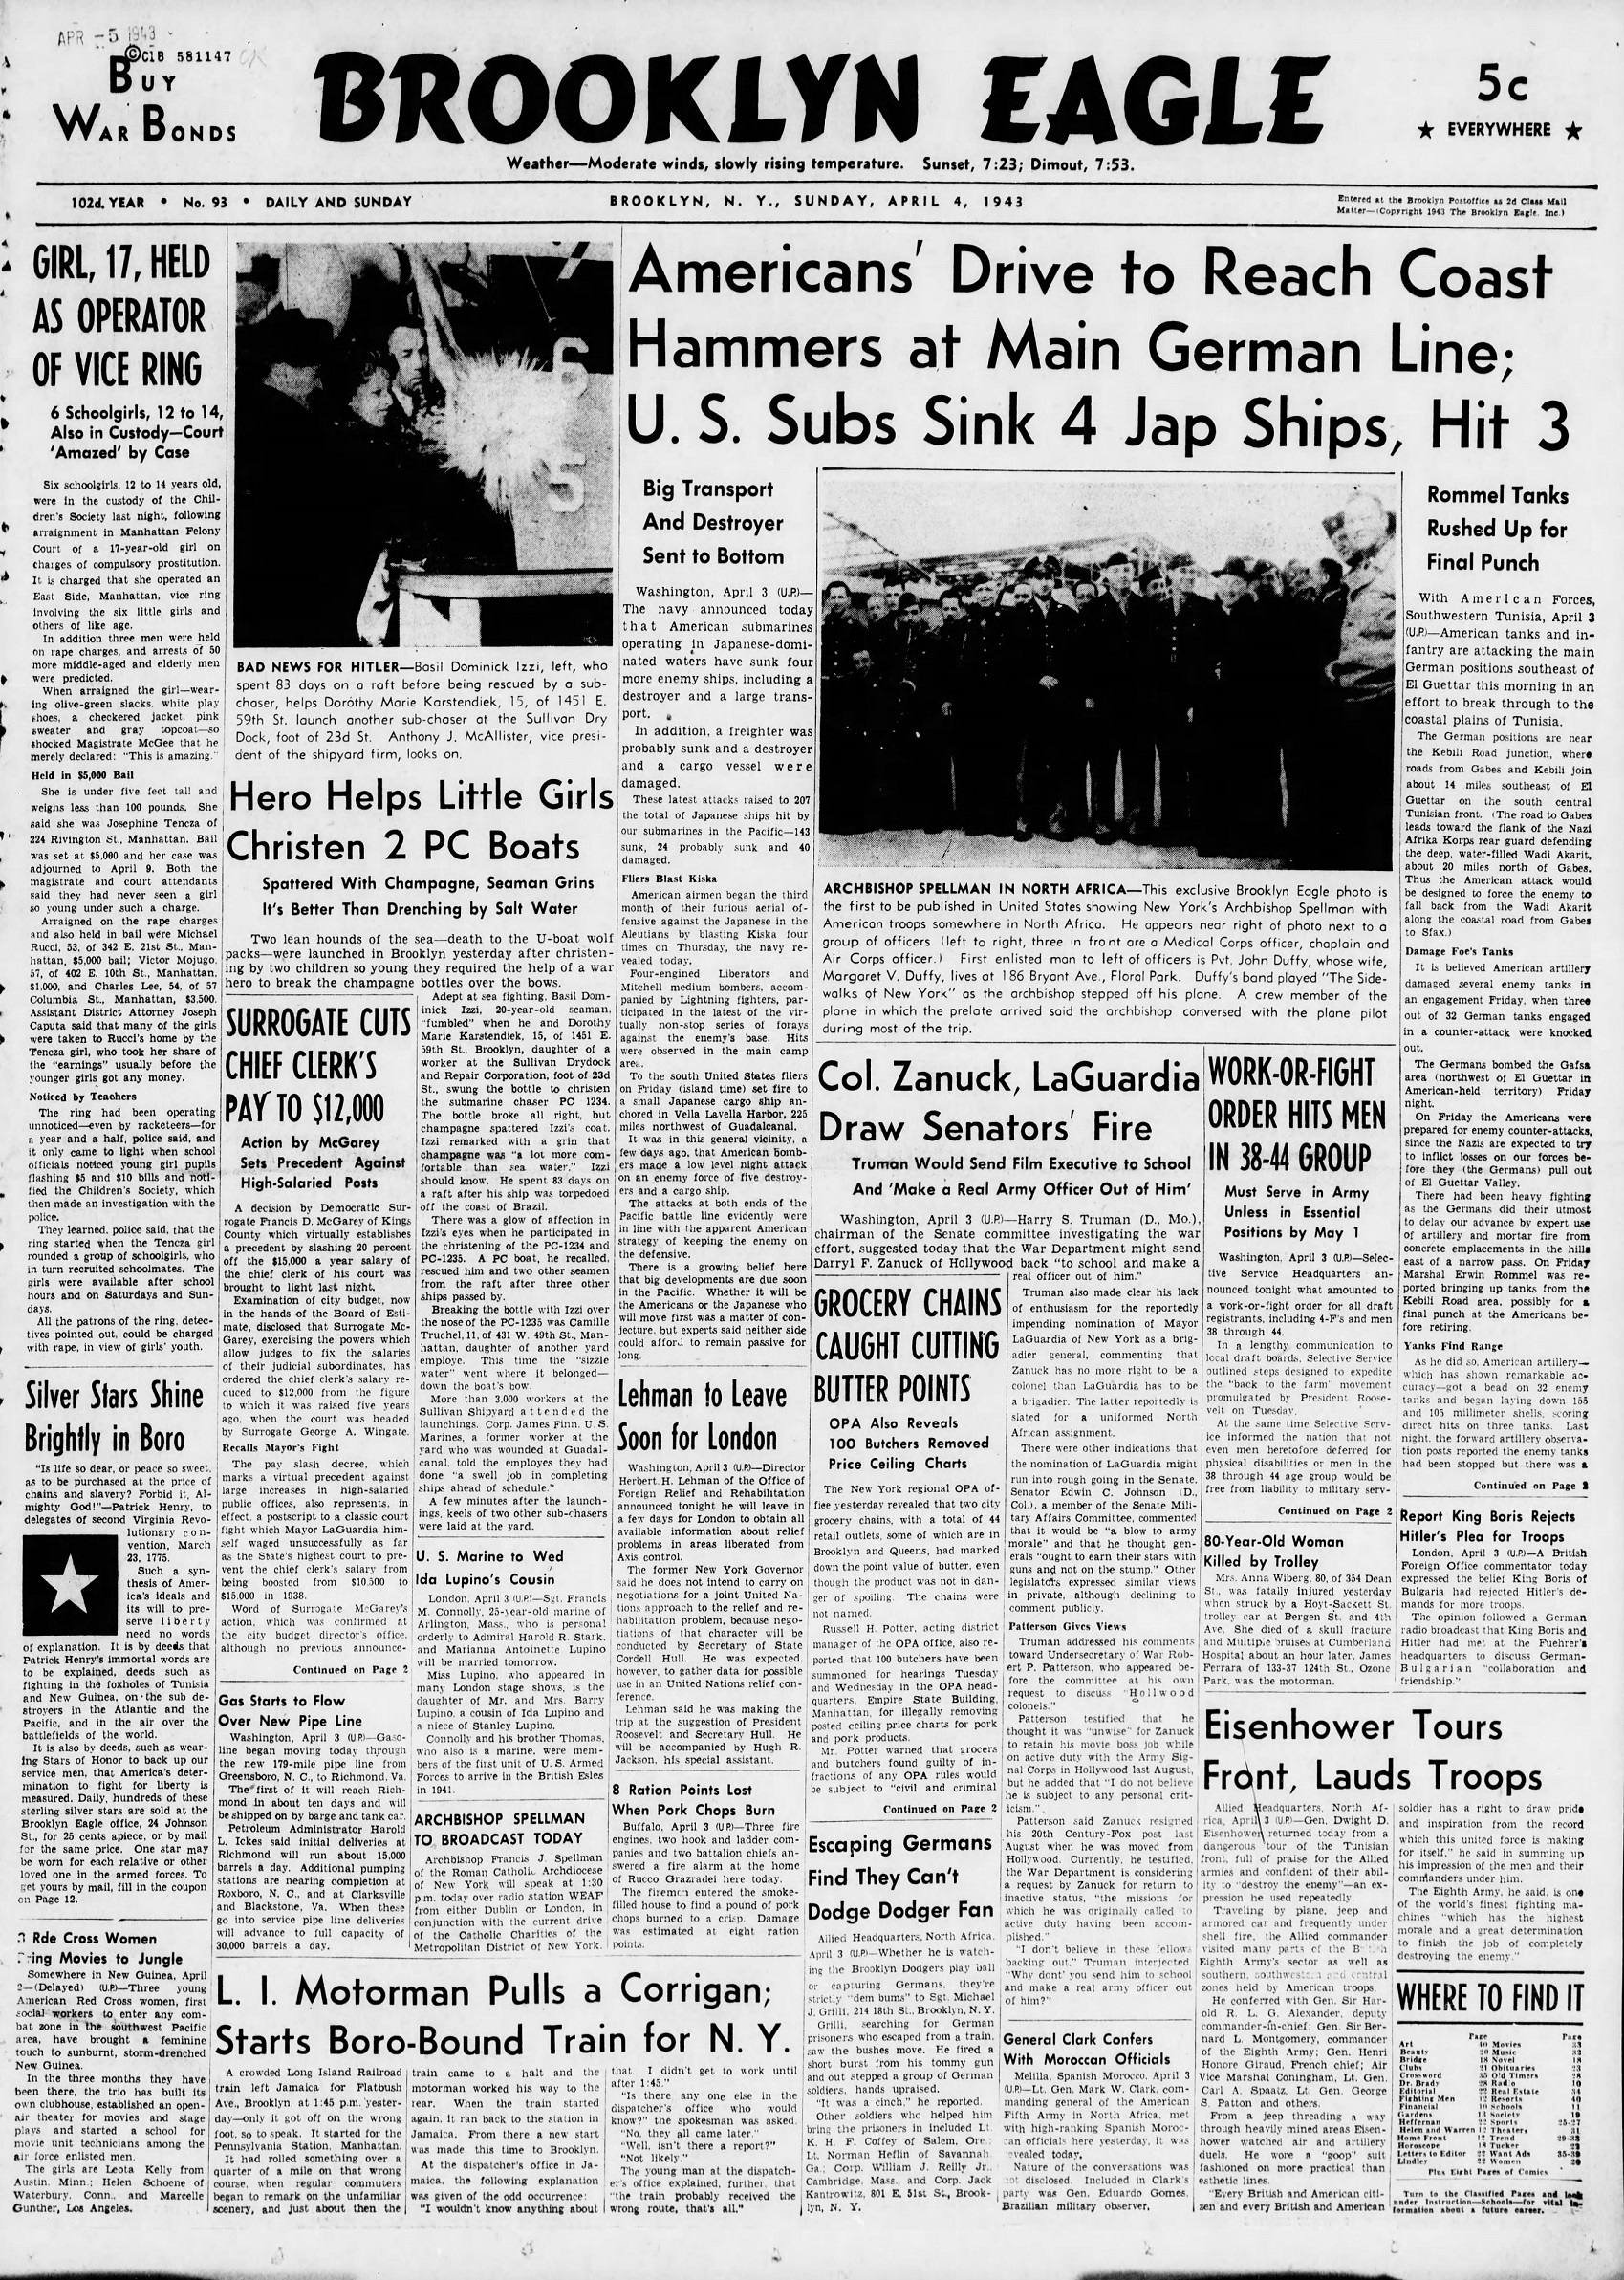 The_Brooklyn_Daily_Eagle_Sun__Apr_4__1943_.jpg